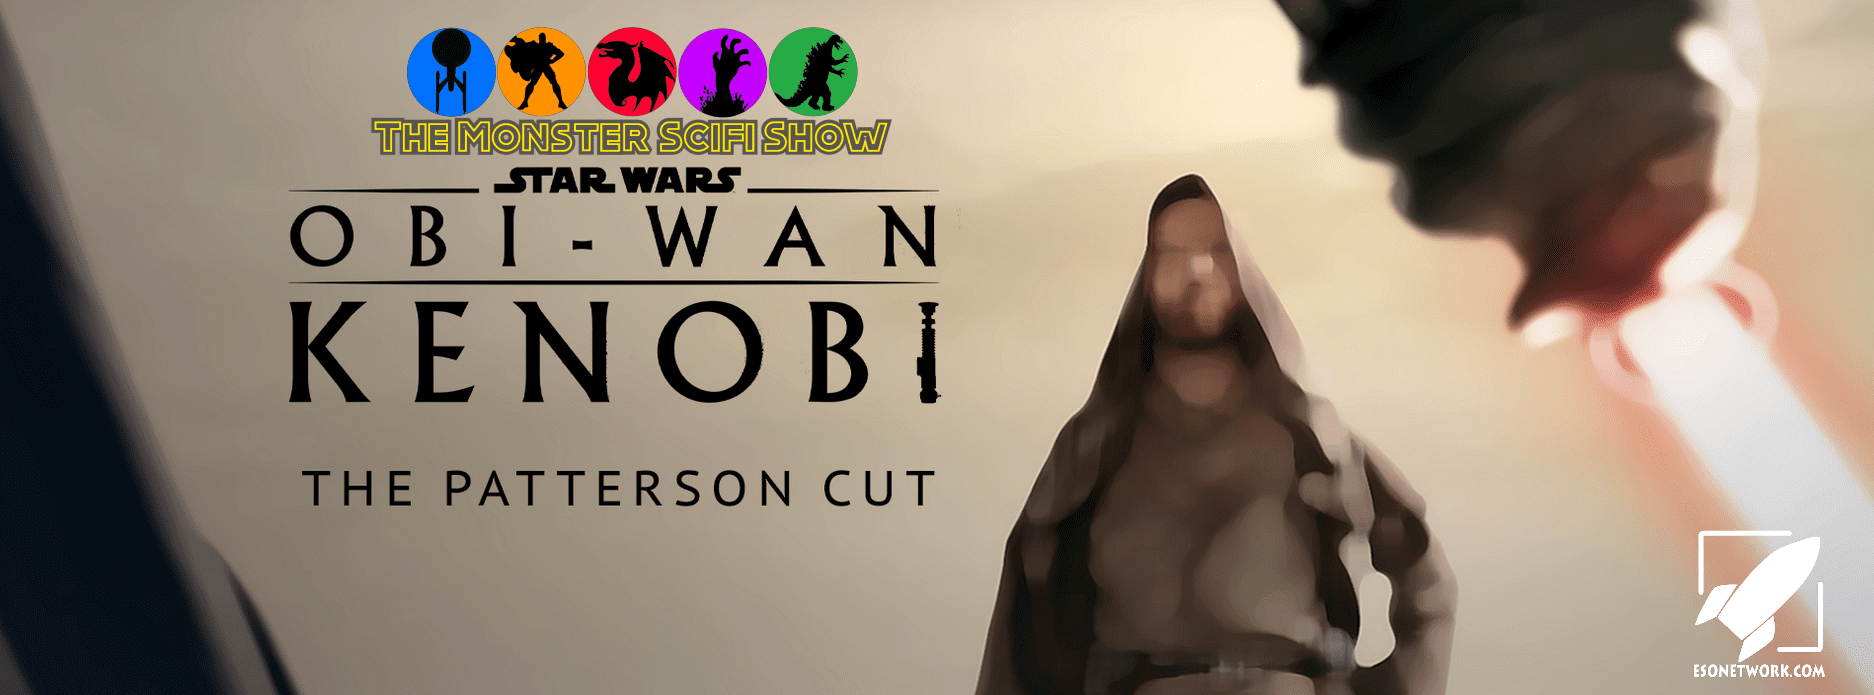 The Monster Scifi Show - Star Wars Obi-Wan Kenobi - The Patterson Cut